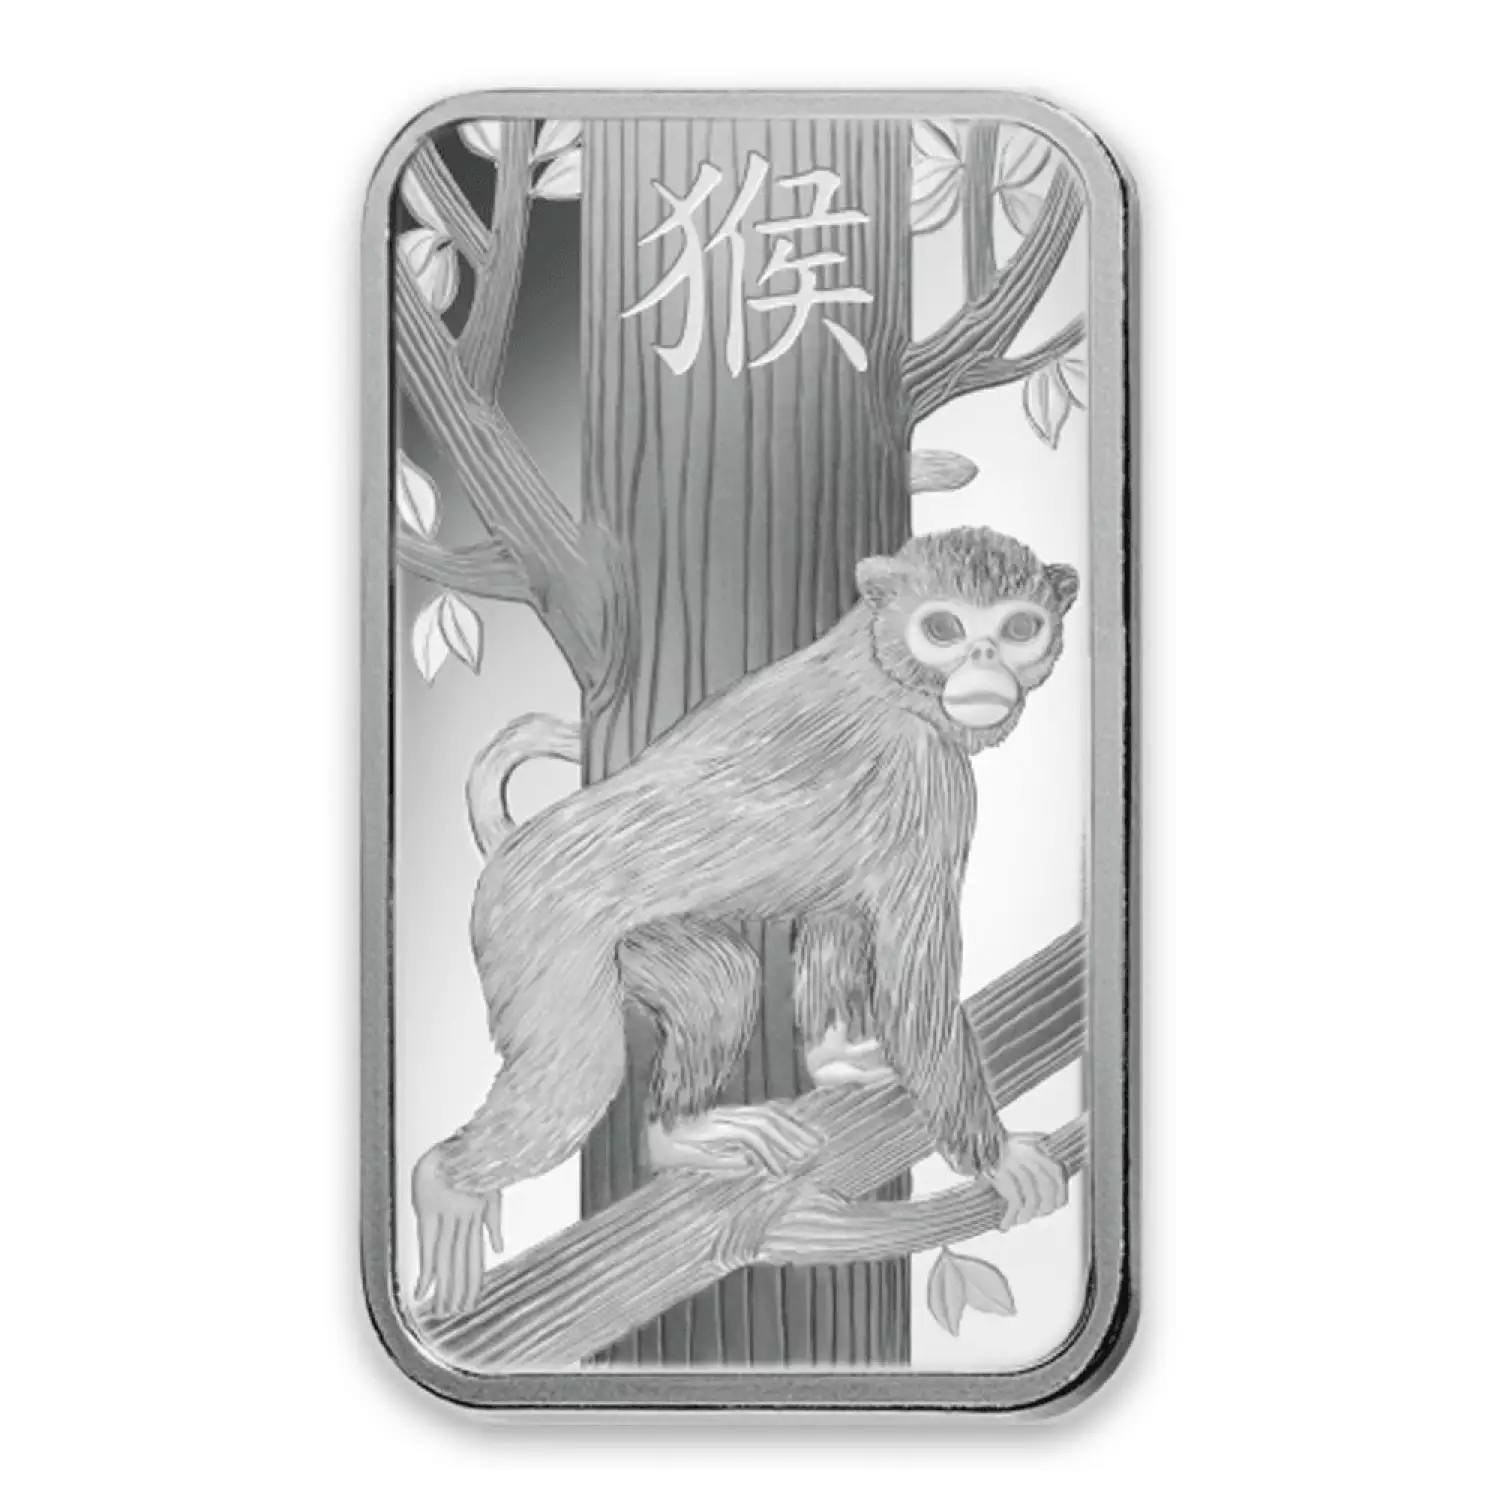 100g PAMP Silver Bar - Lunar Monkey (2)